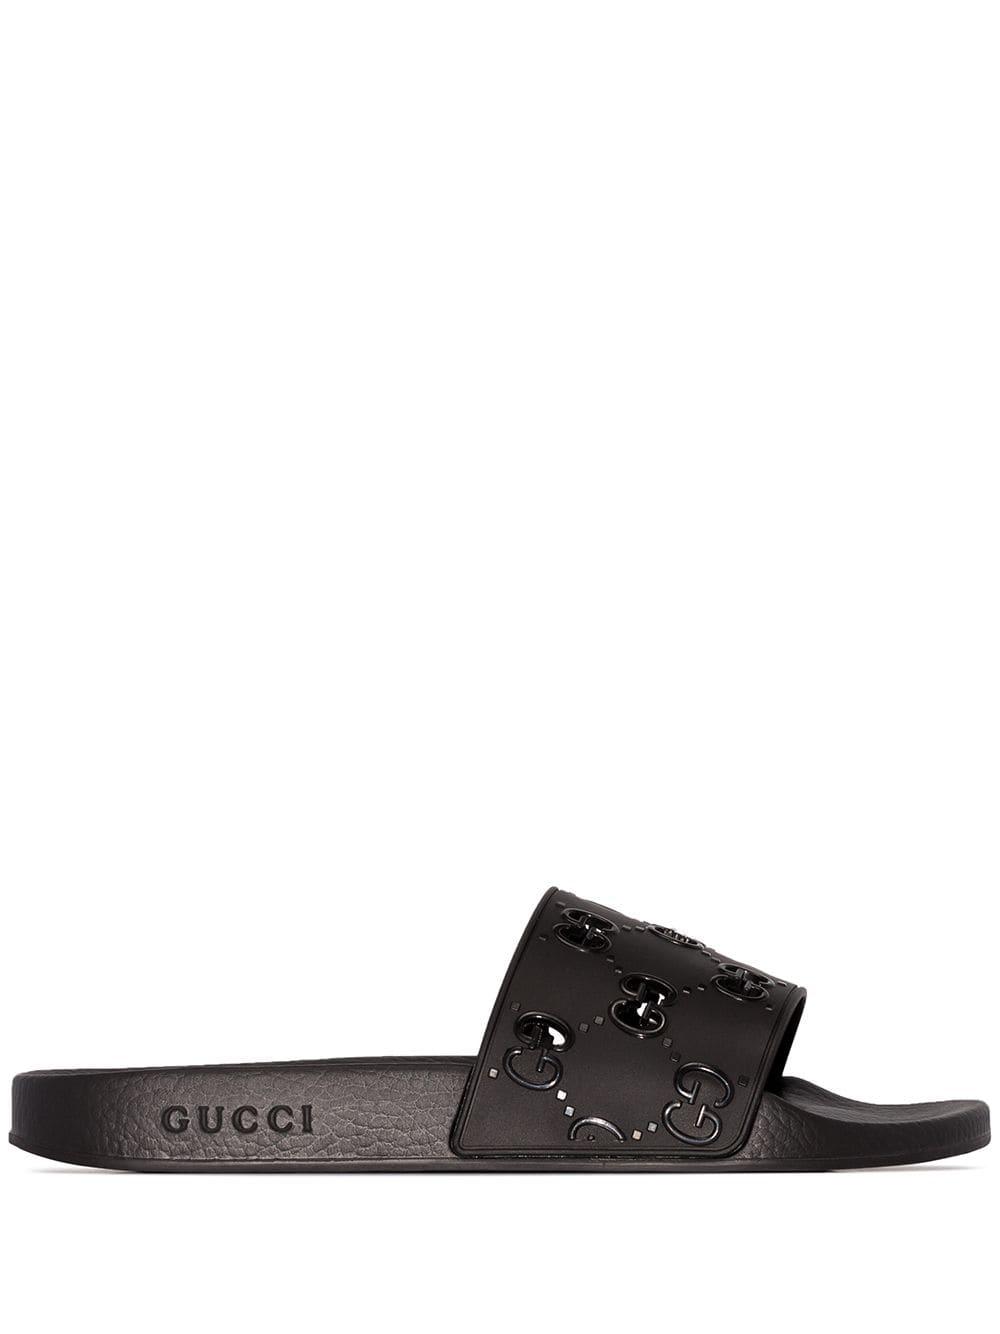 Gucci Rubber Pursuit GG Logo Slides in Black for Men - Save 14% - Lyst